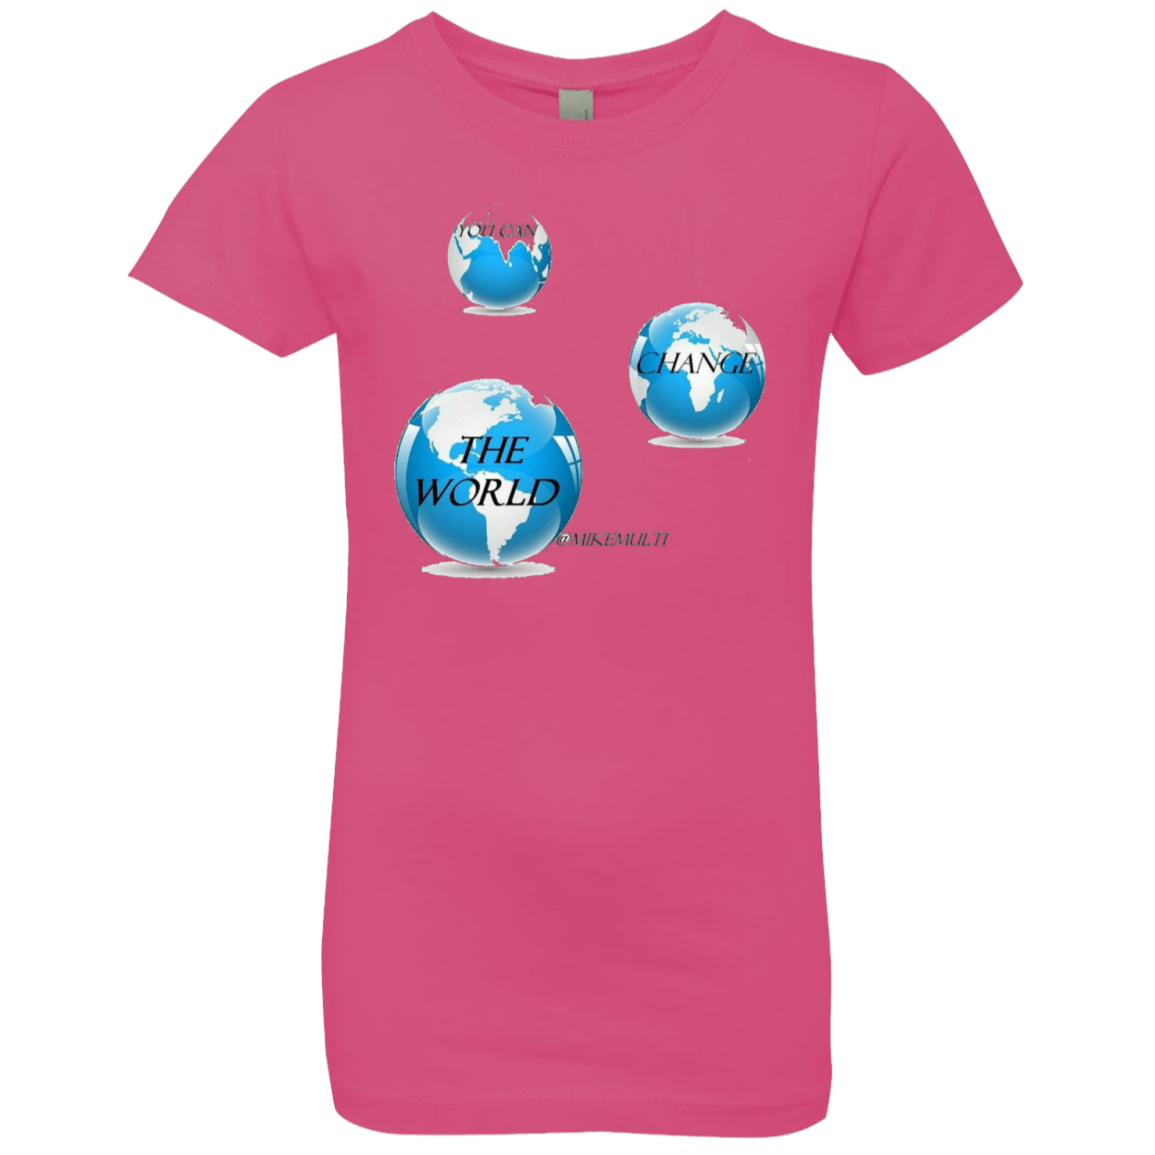 You Can Change The World - Girls' Princess T-Shirt CustomCat